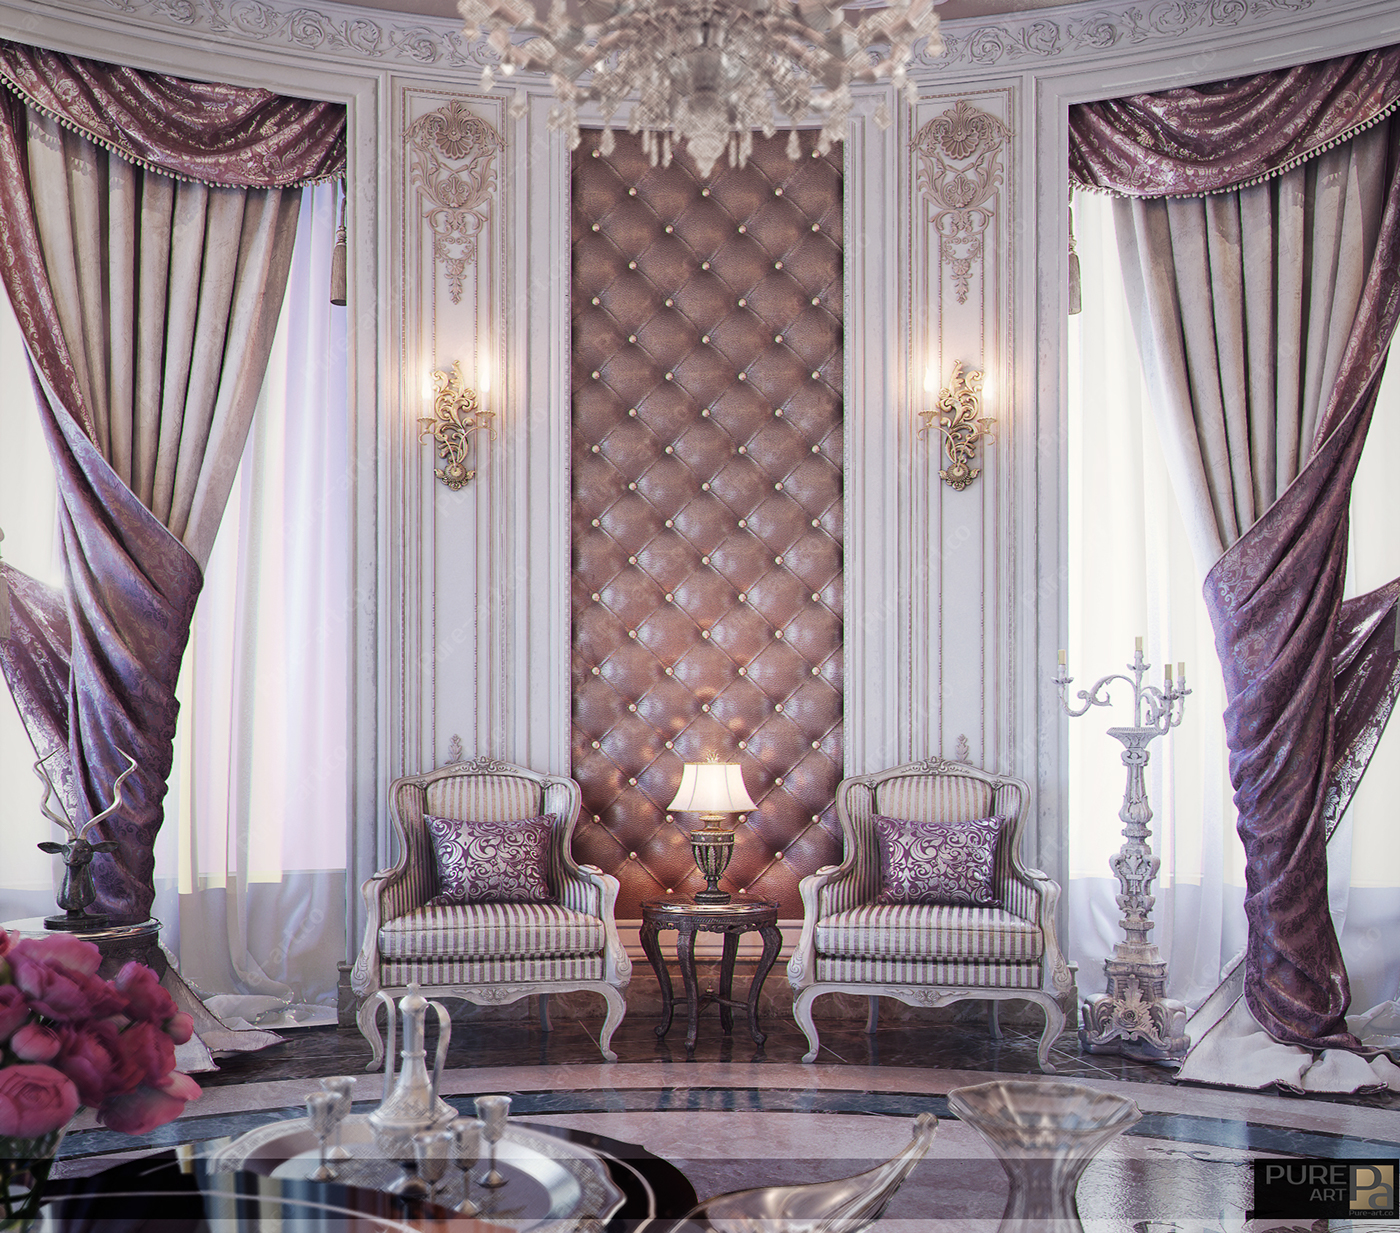 luxury palace dining room Interior design Classic decor Style Villa